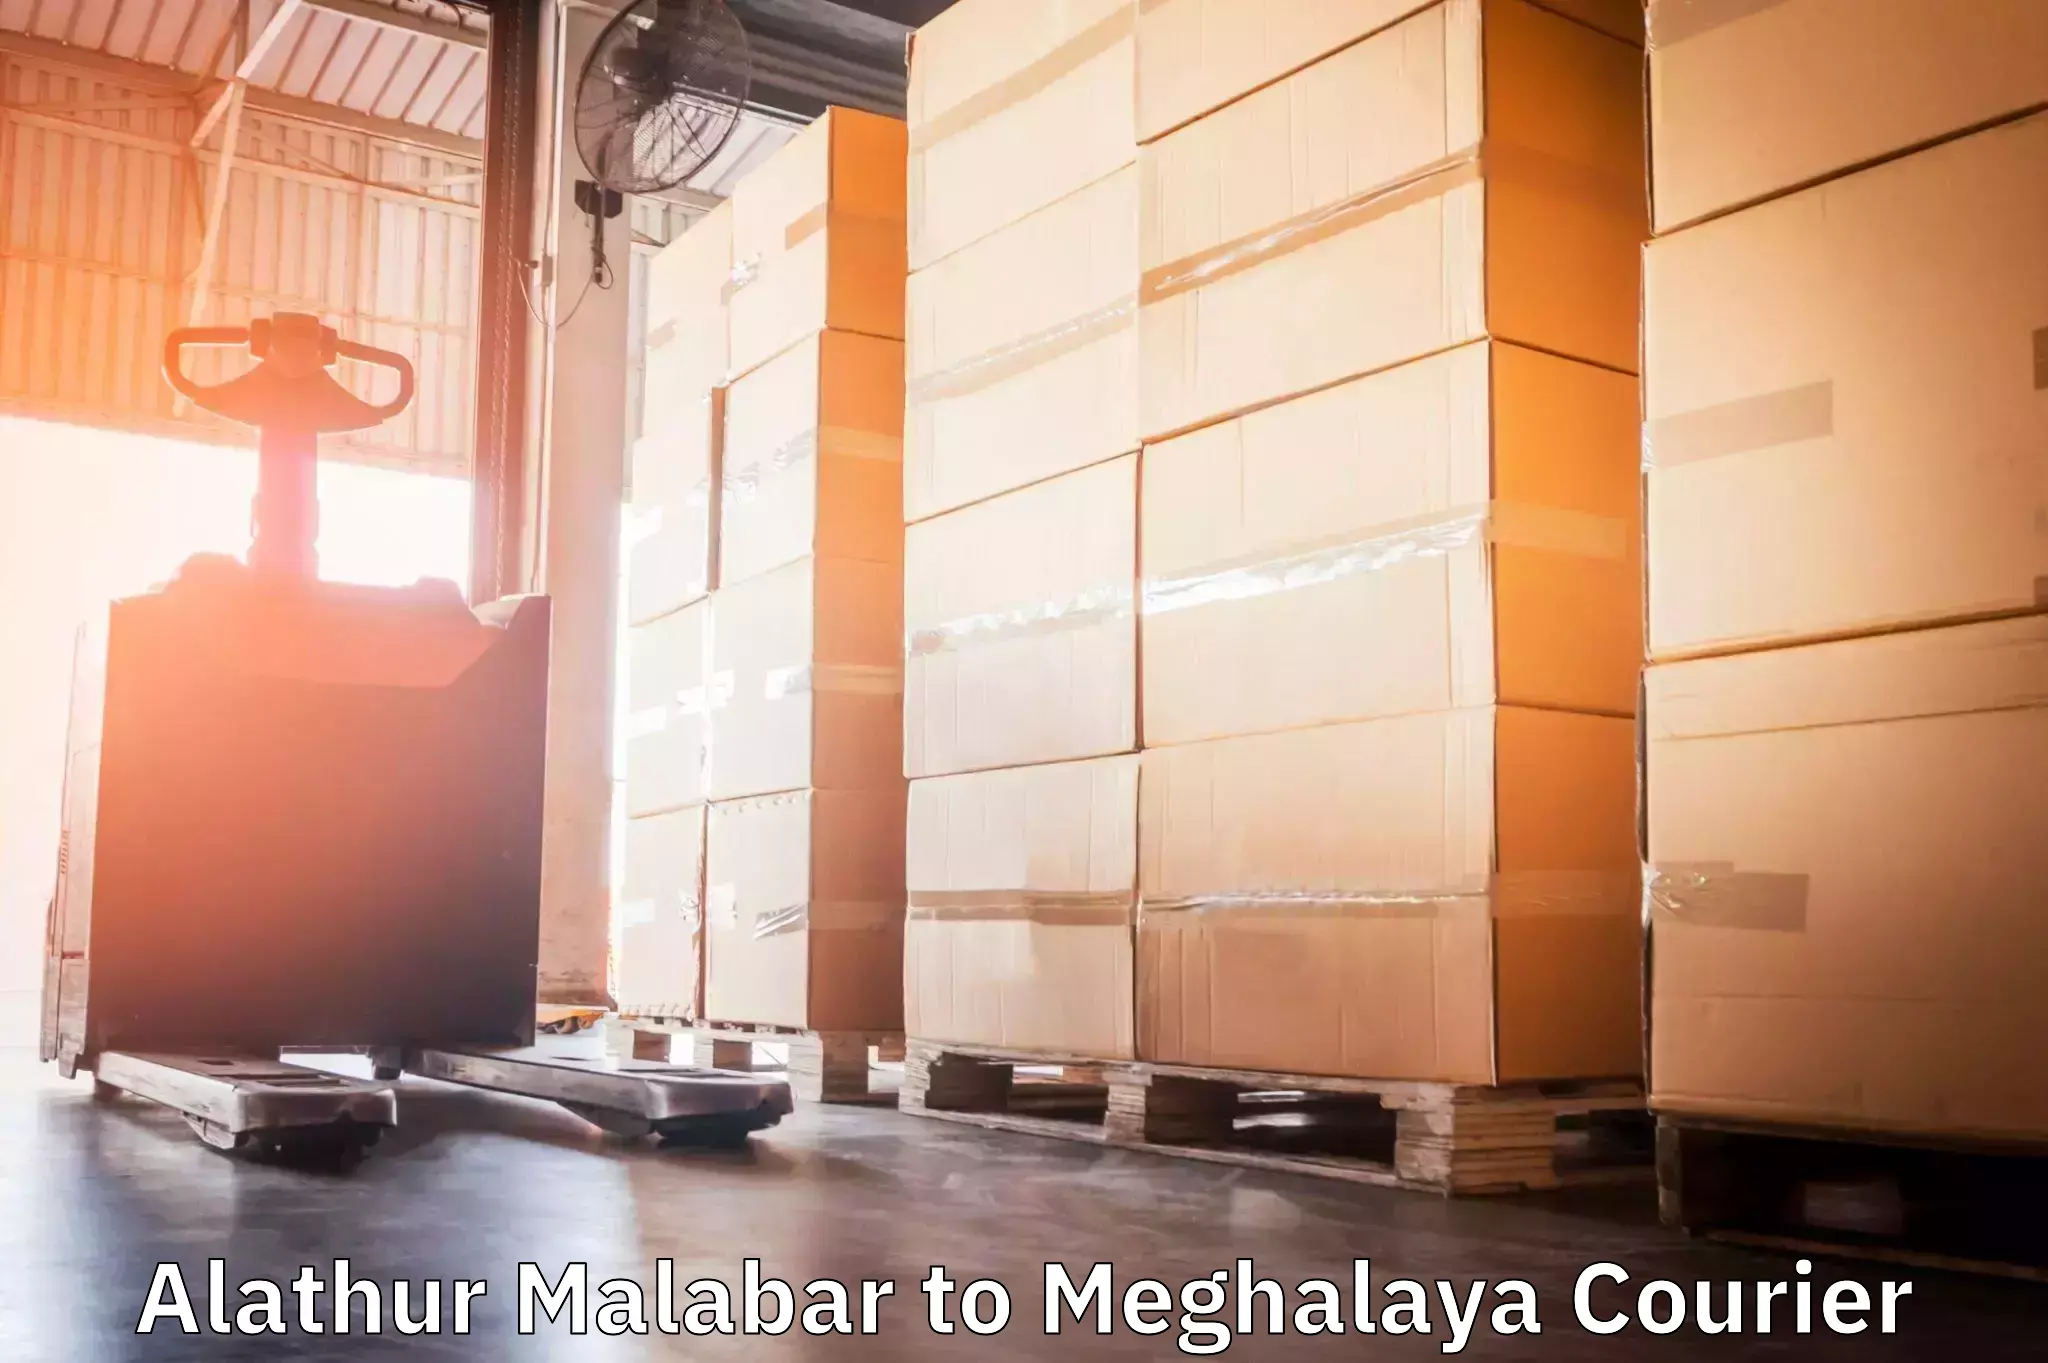 Courier service partnerships Alathur Malabar to Tura